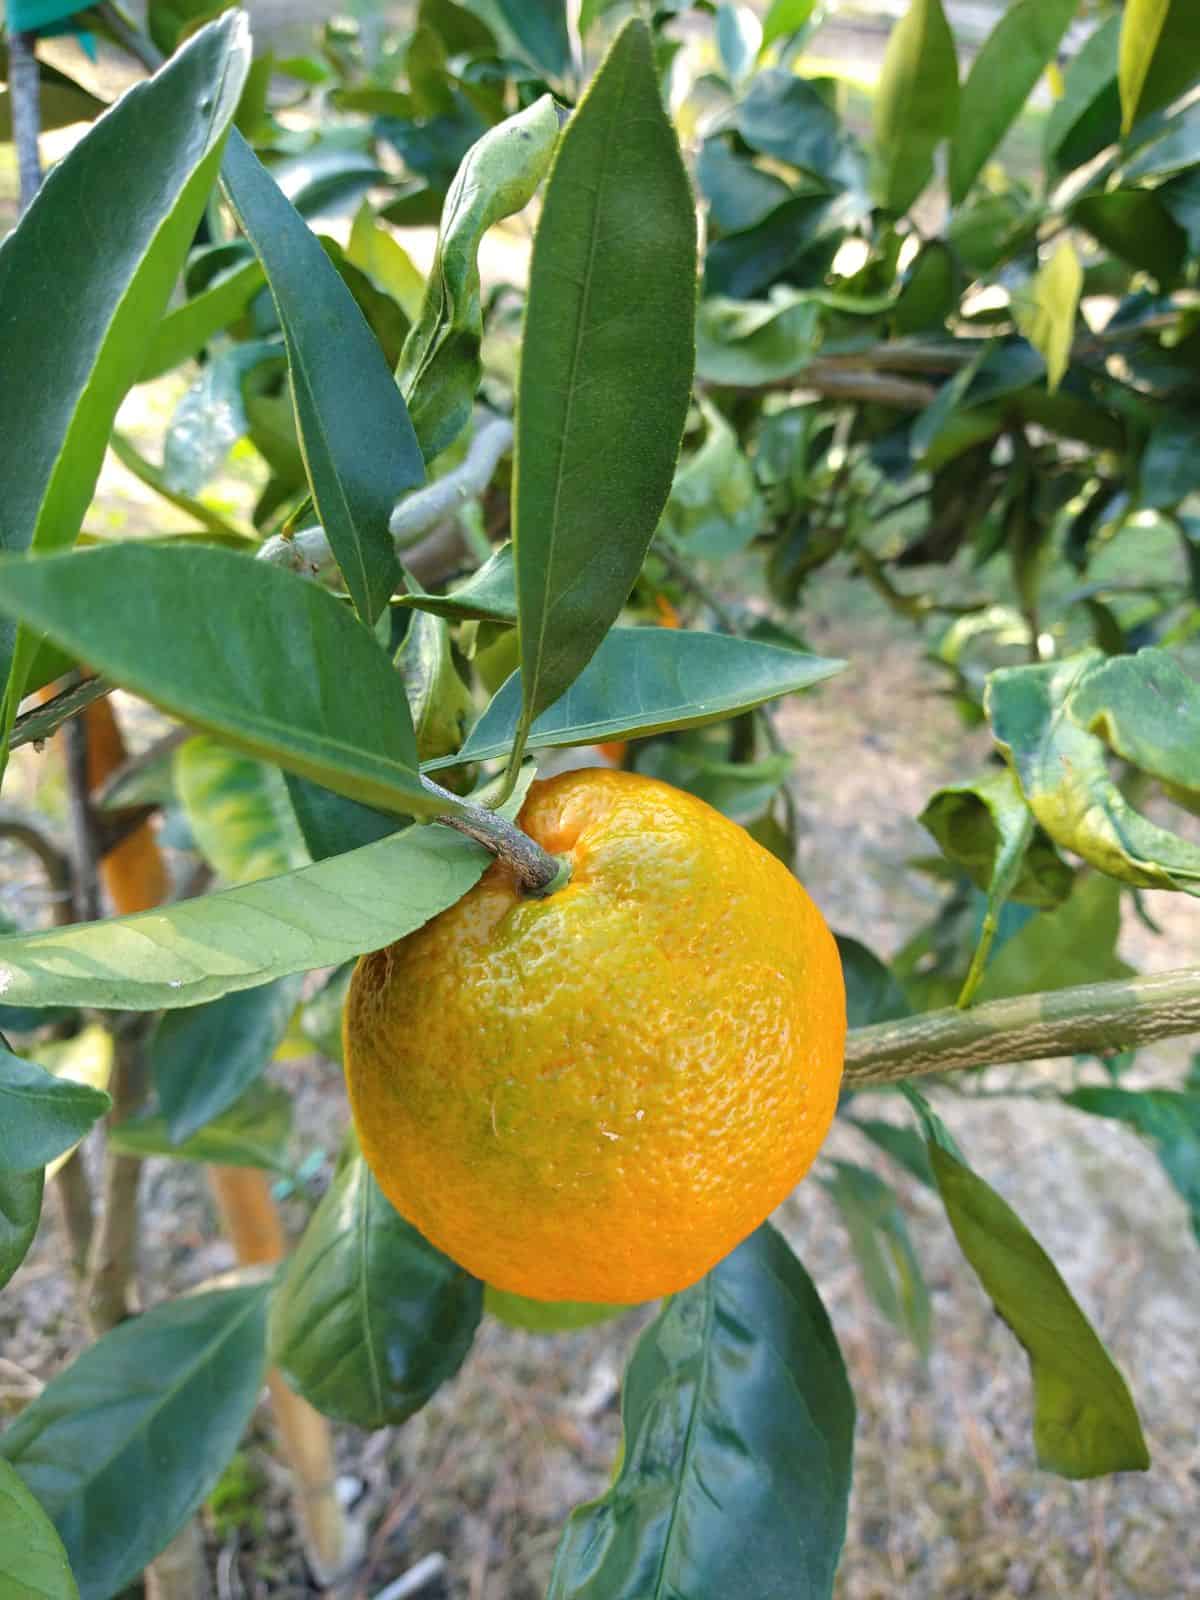 A single orange Satsuma with a little bit of green in it's peel growing in a tree.